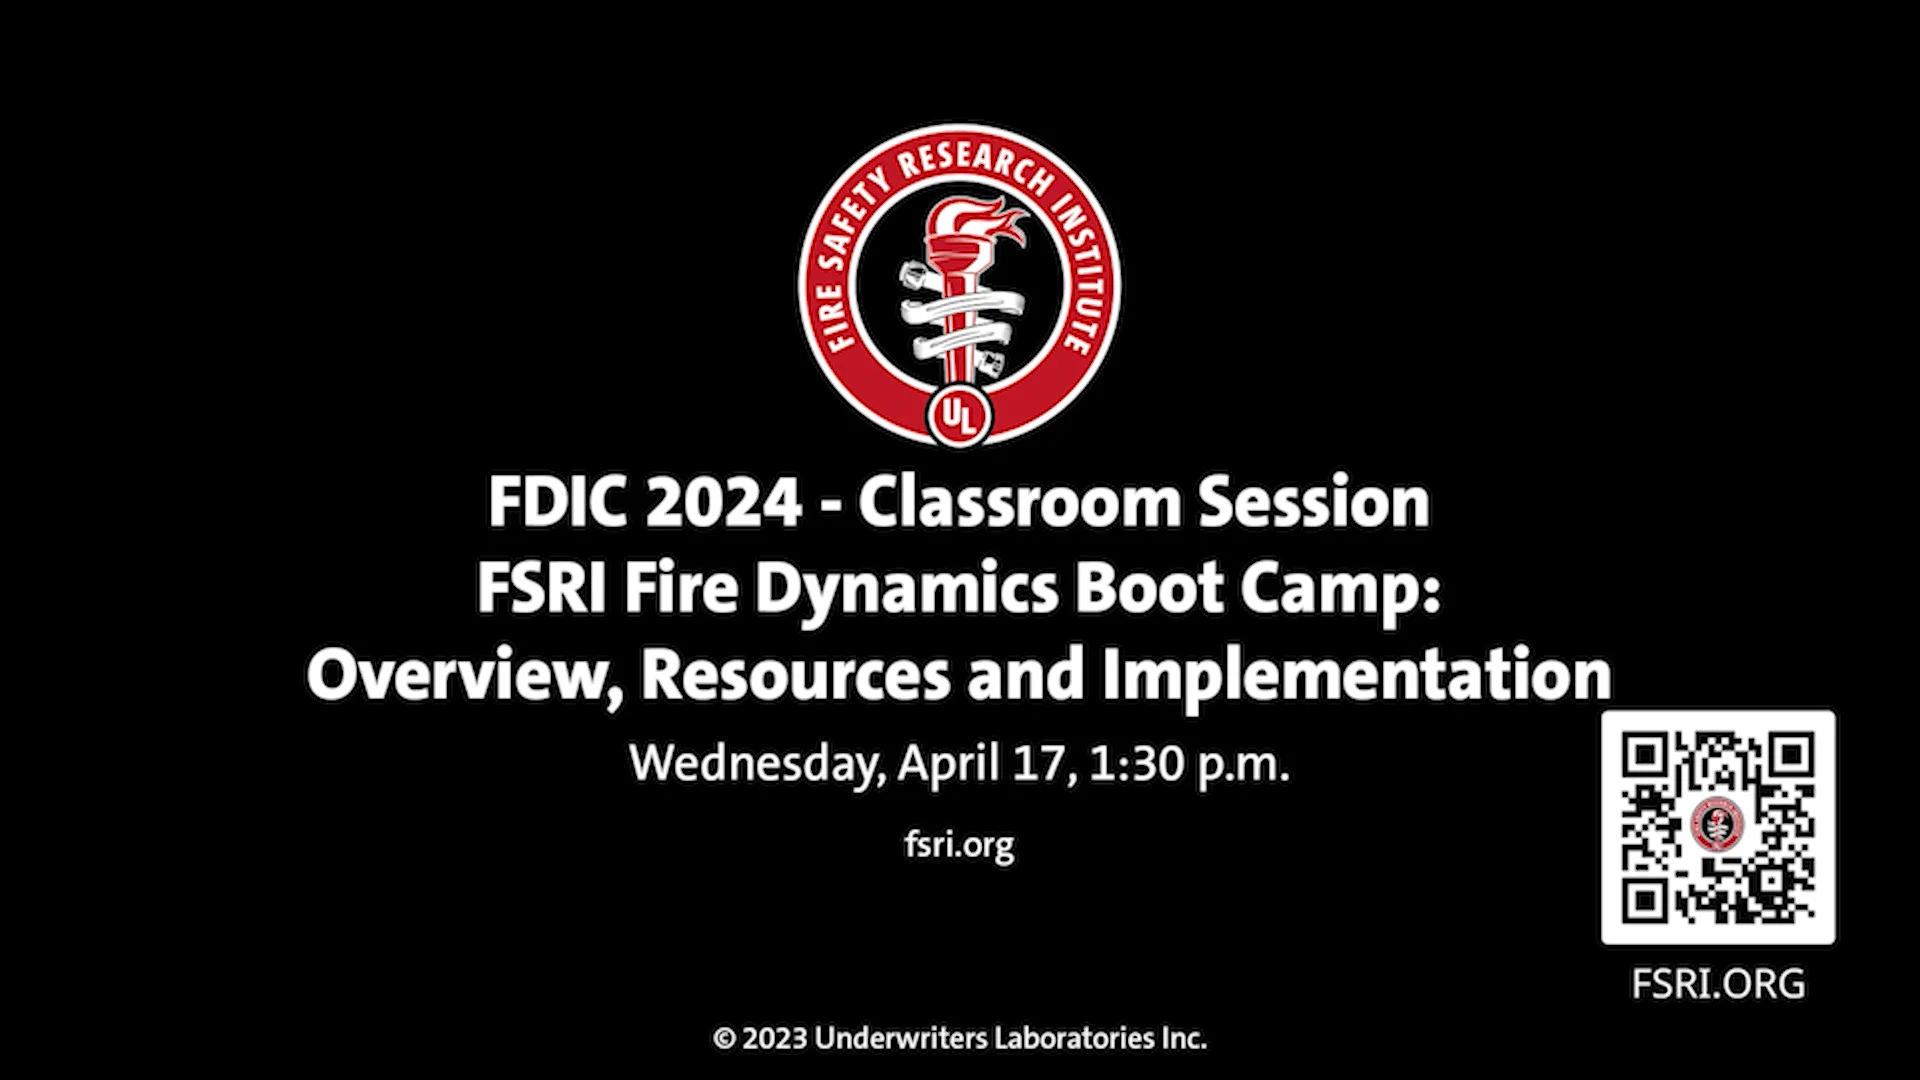 FDIC 2024 Classroom Session on Vimeo